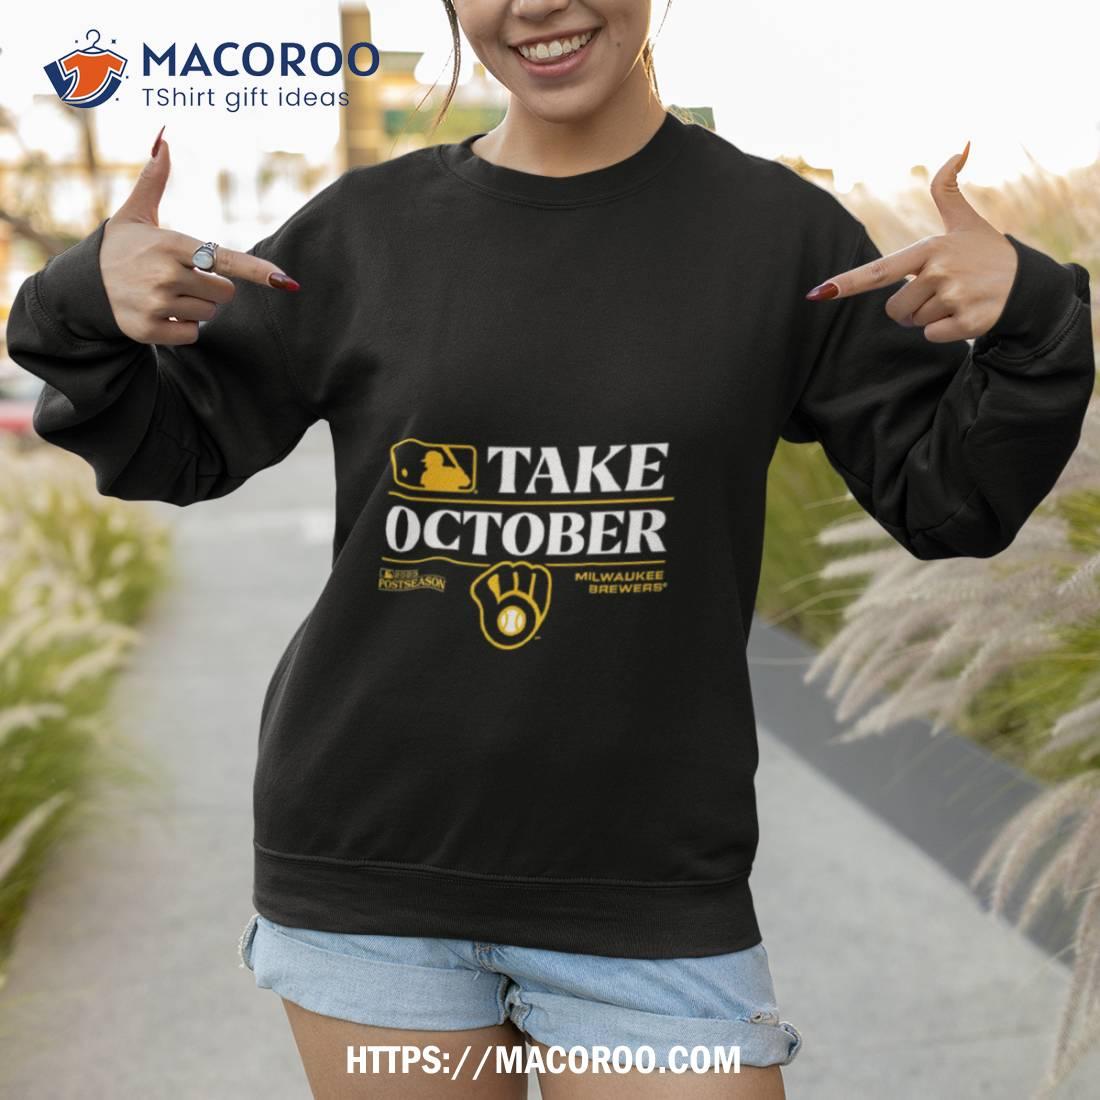 Take October Milwaukee Brewers 2023 Postseason shirt, hoodie